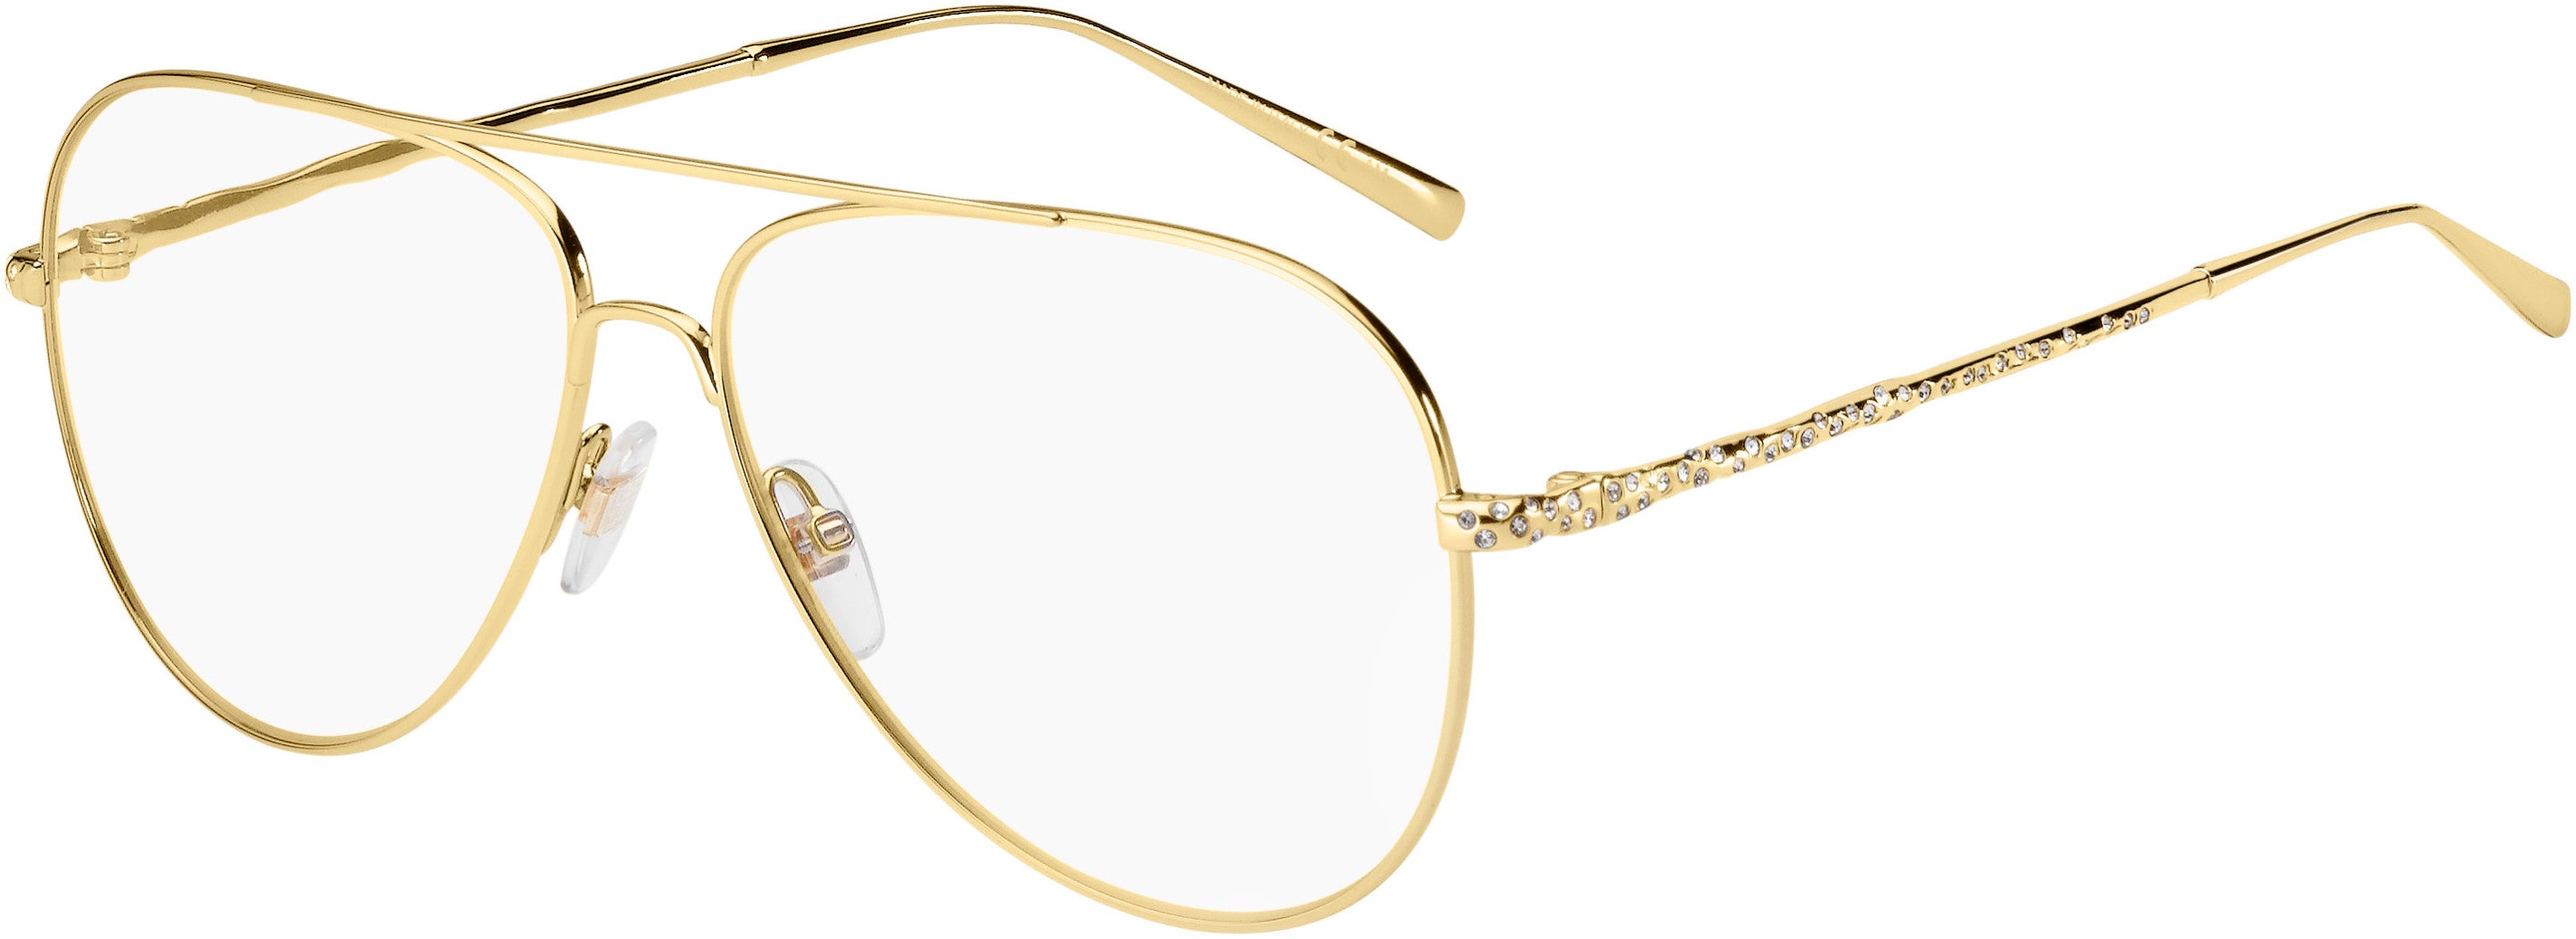  Givenchy 0127 Aviator Eyeglasses 0J5G-0J5G  Gold (00 Demo Lens)